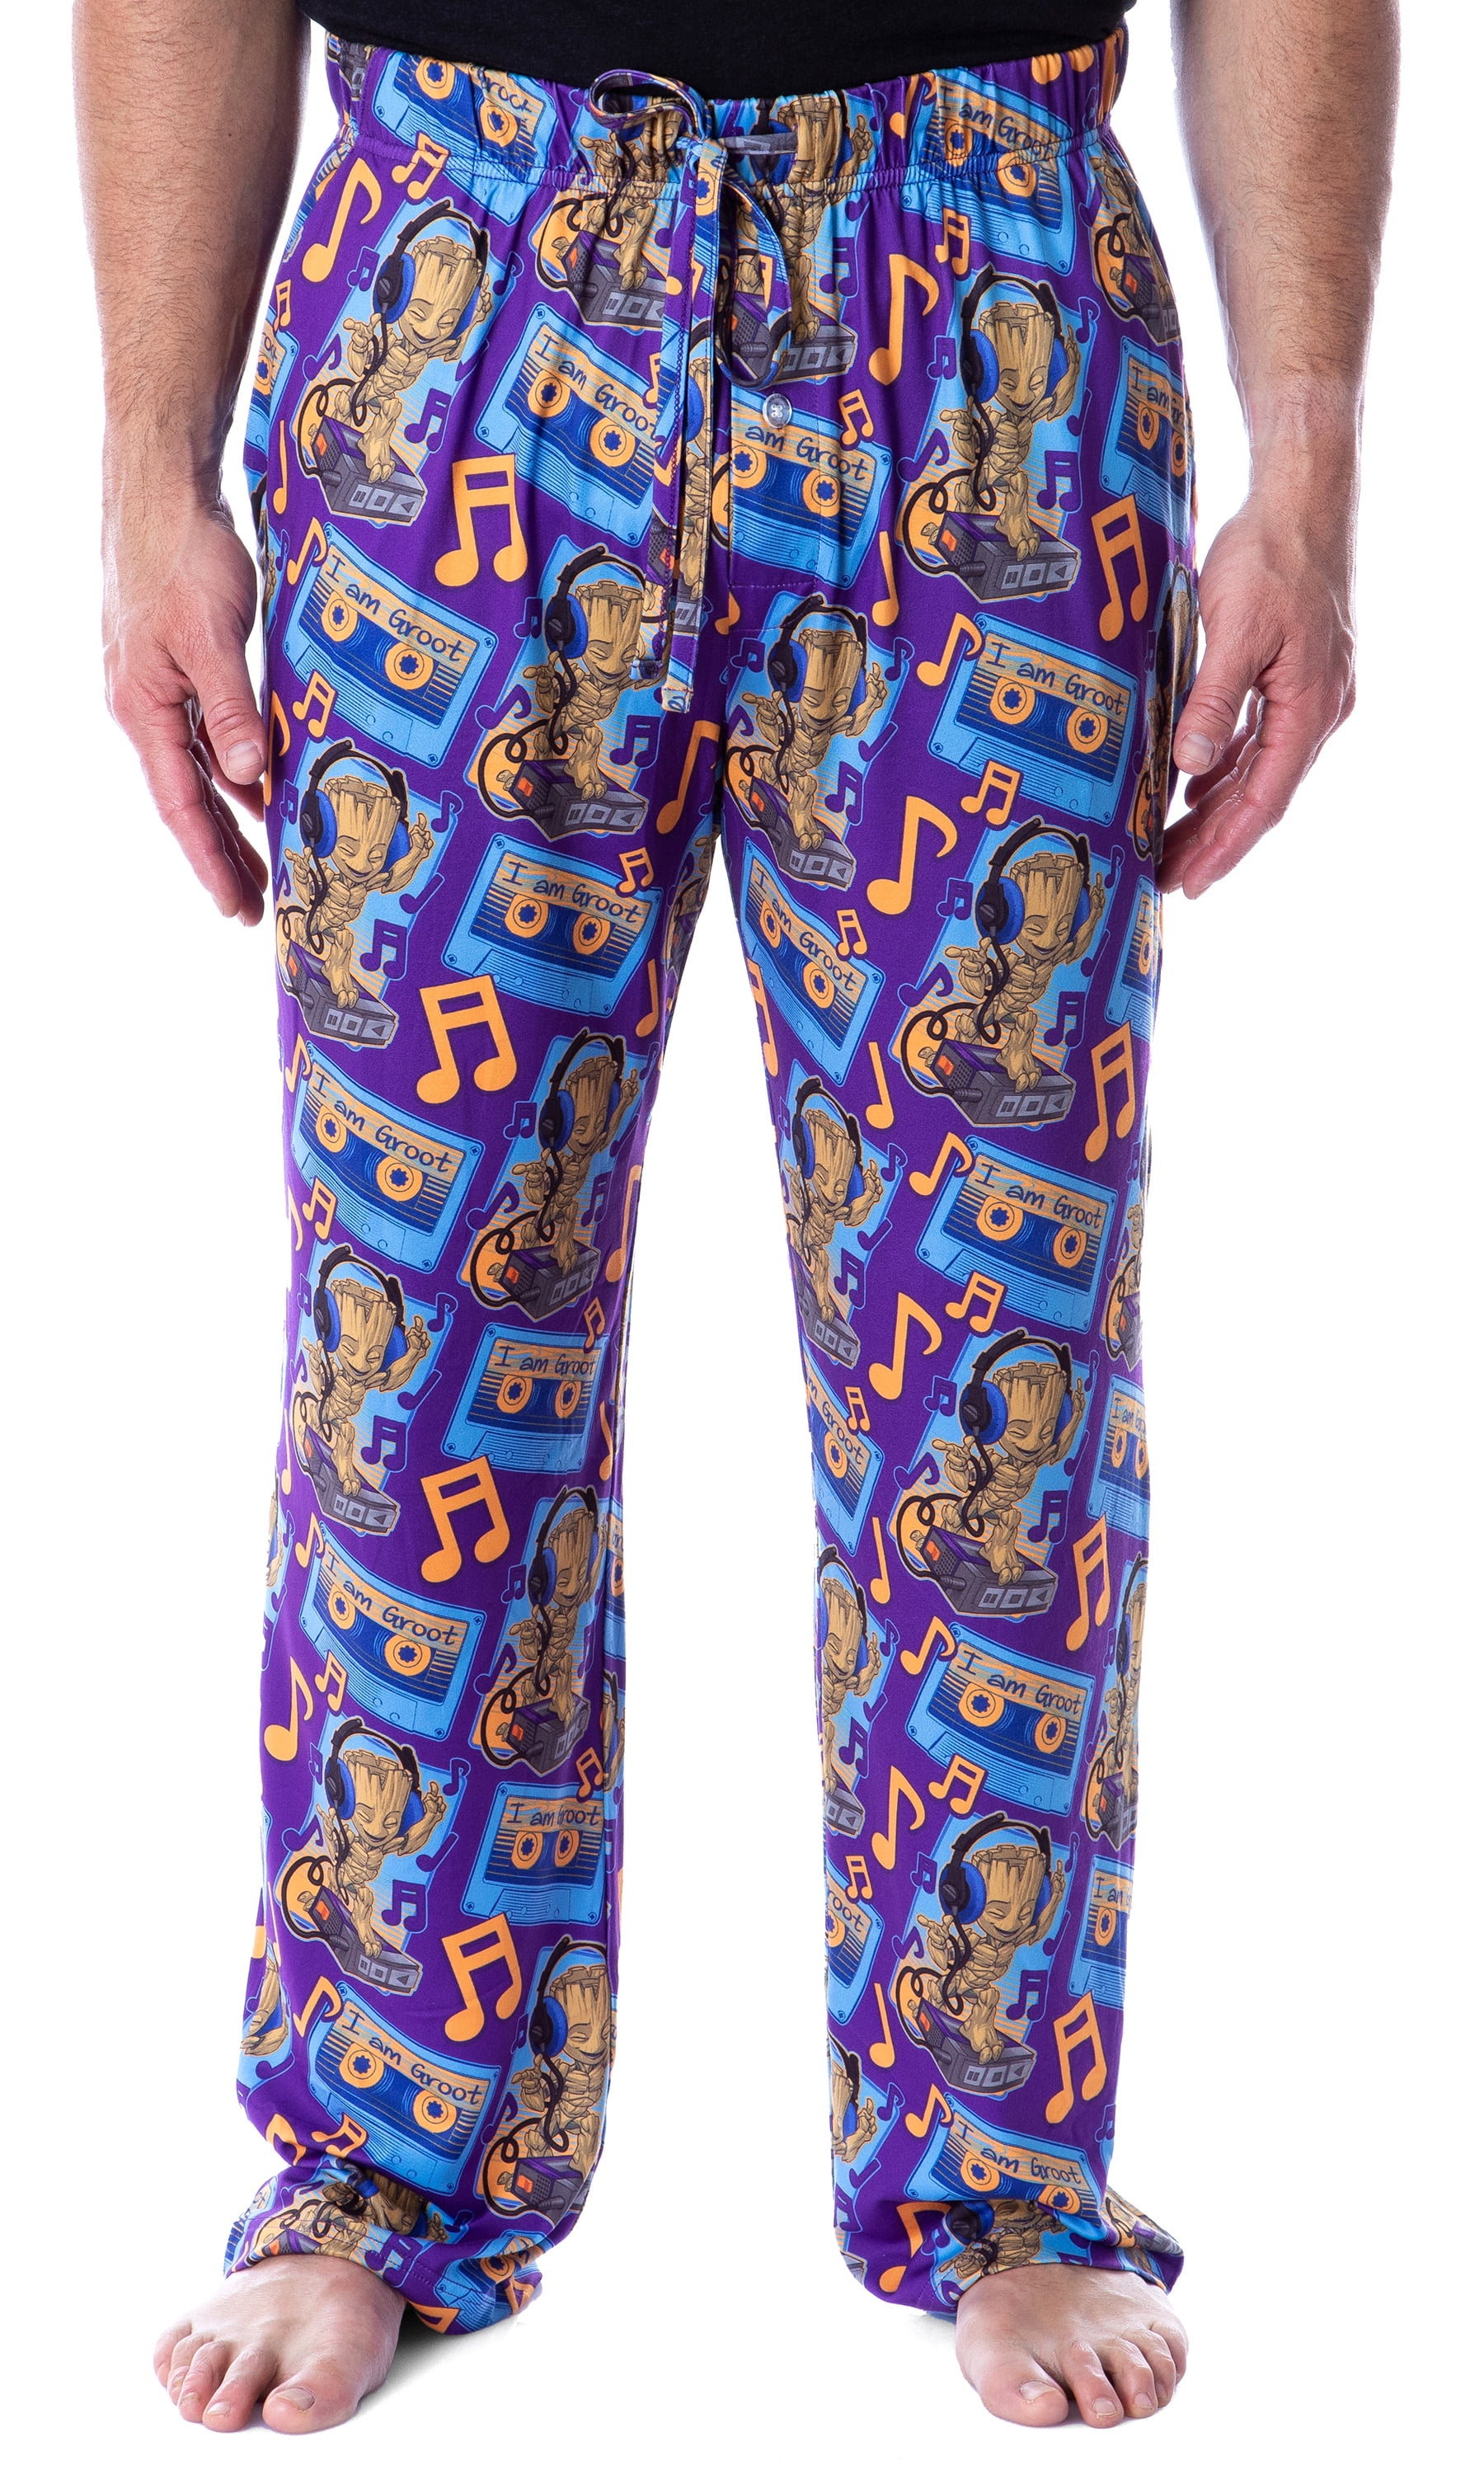 Simba Disney Marvel Groot in pajamas (31cm) - buy at